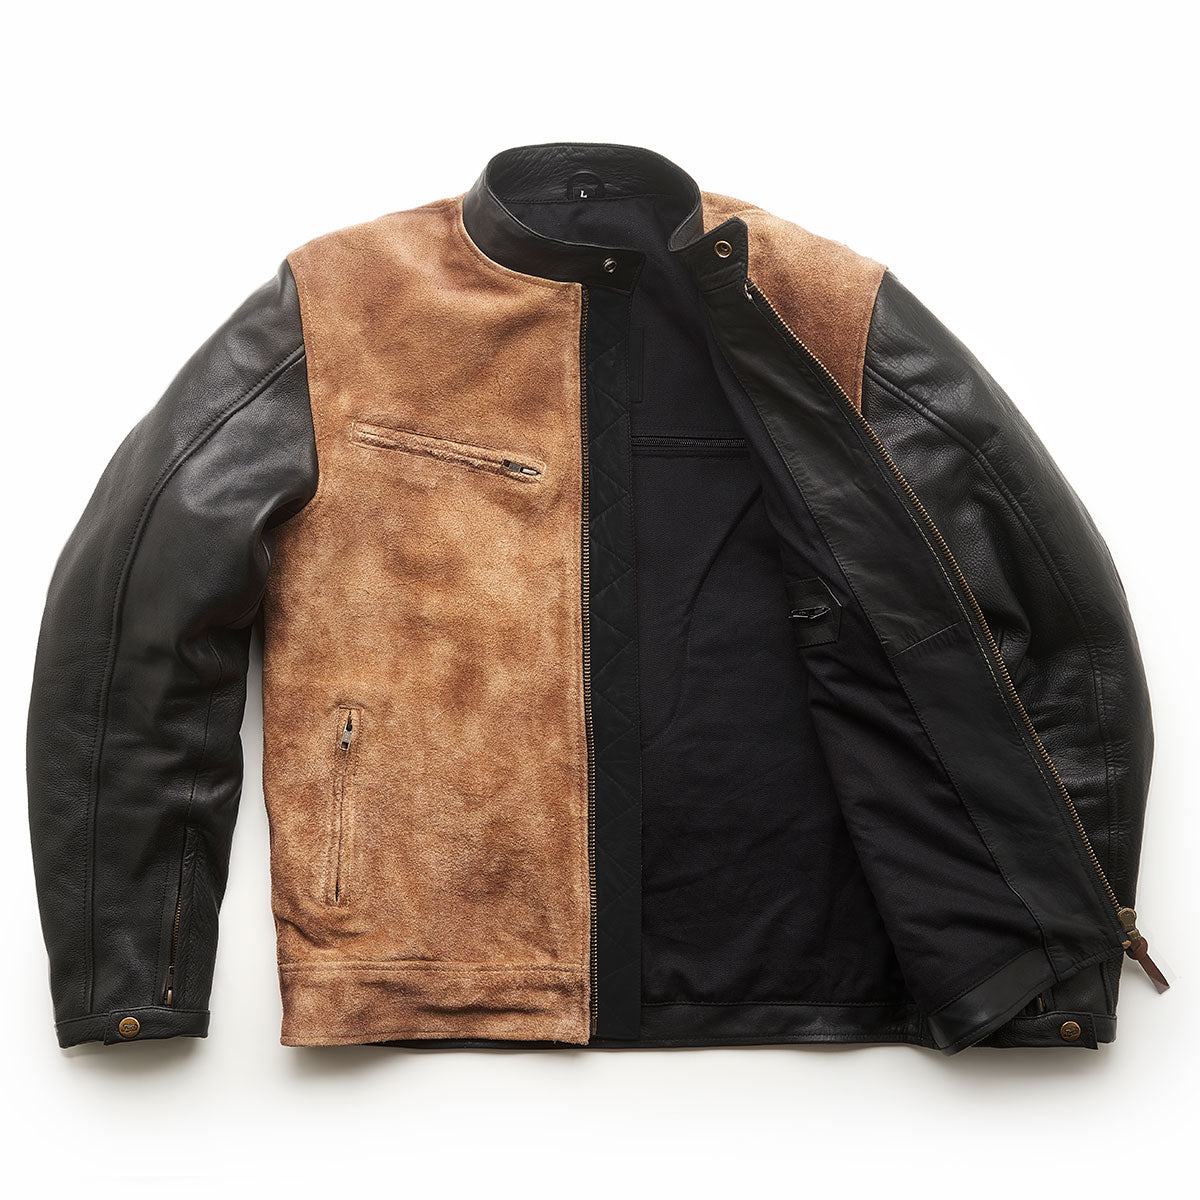 FUEL Sidewaze Jacket Tan Black